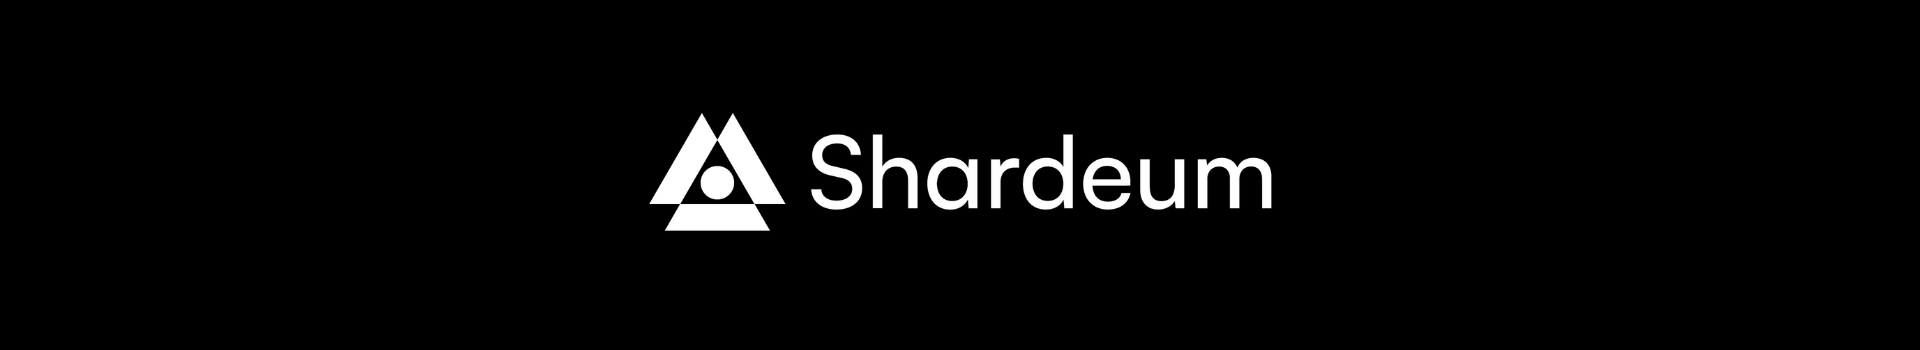 Shardeum - Official Merchandise